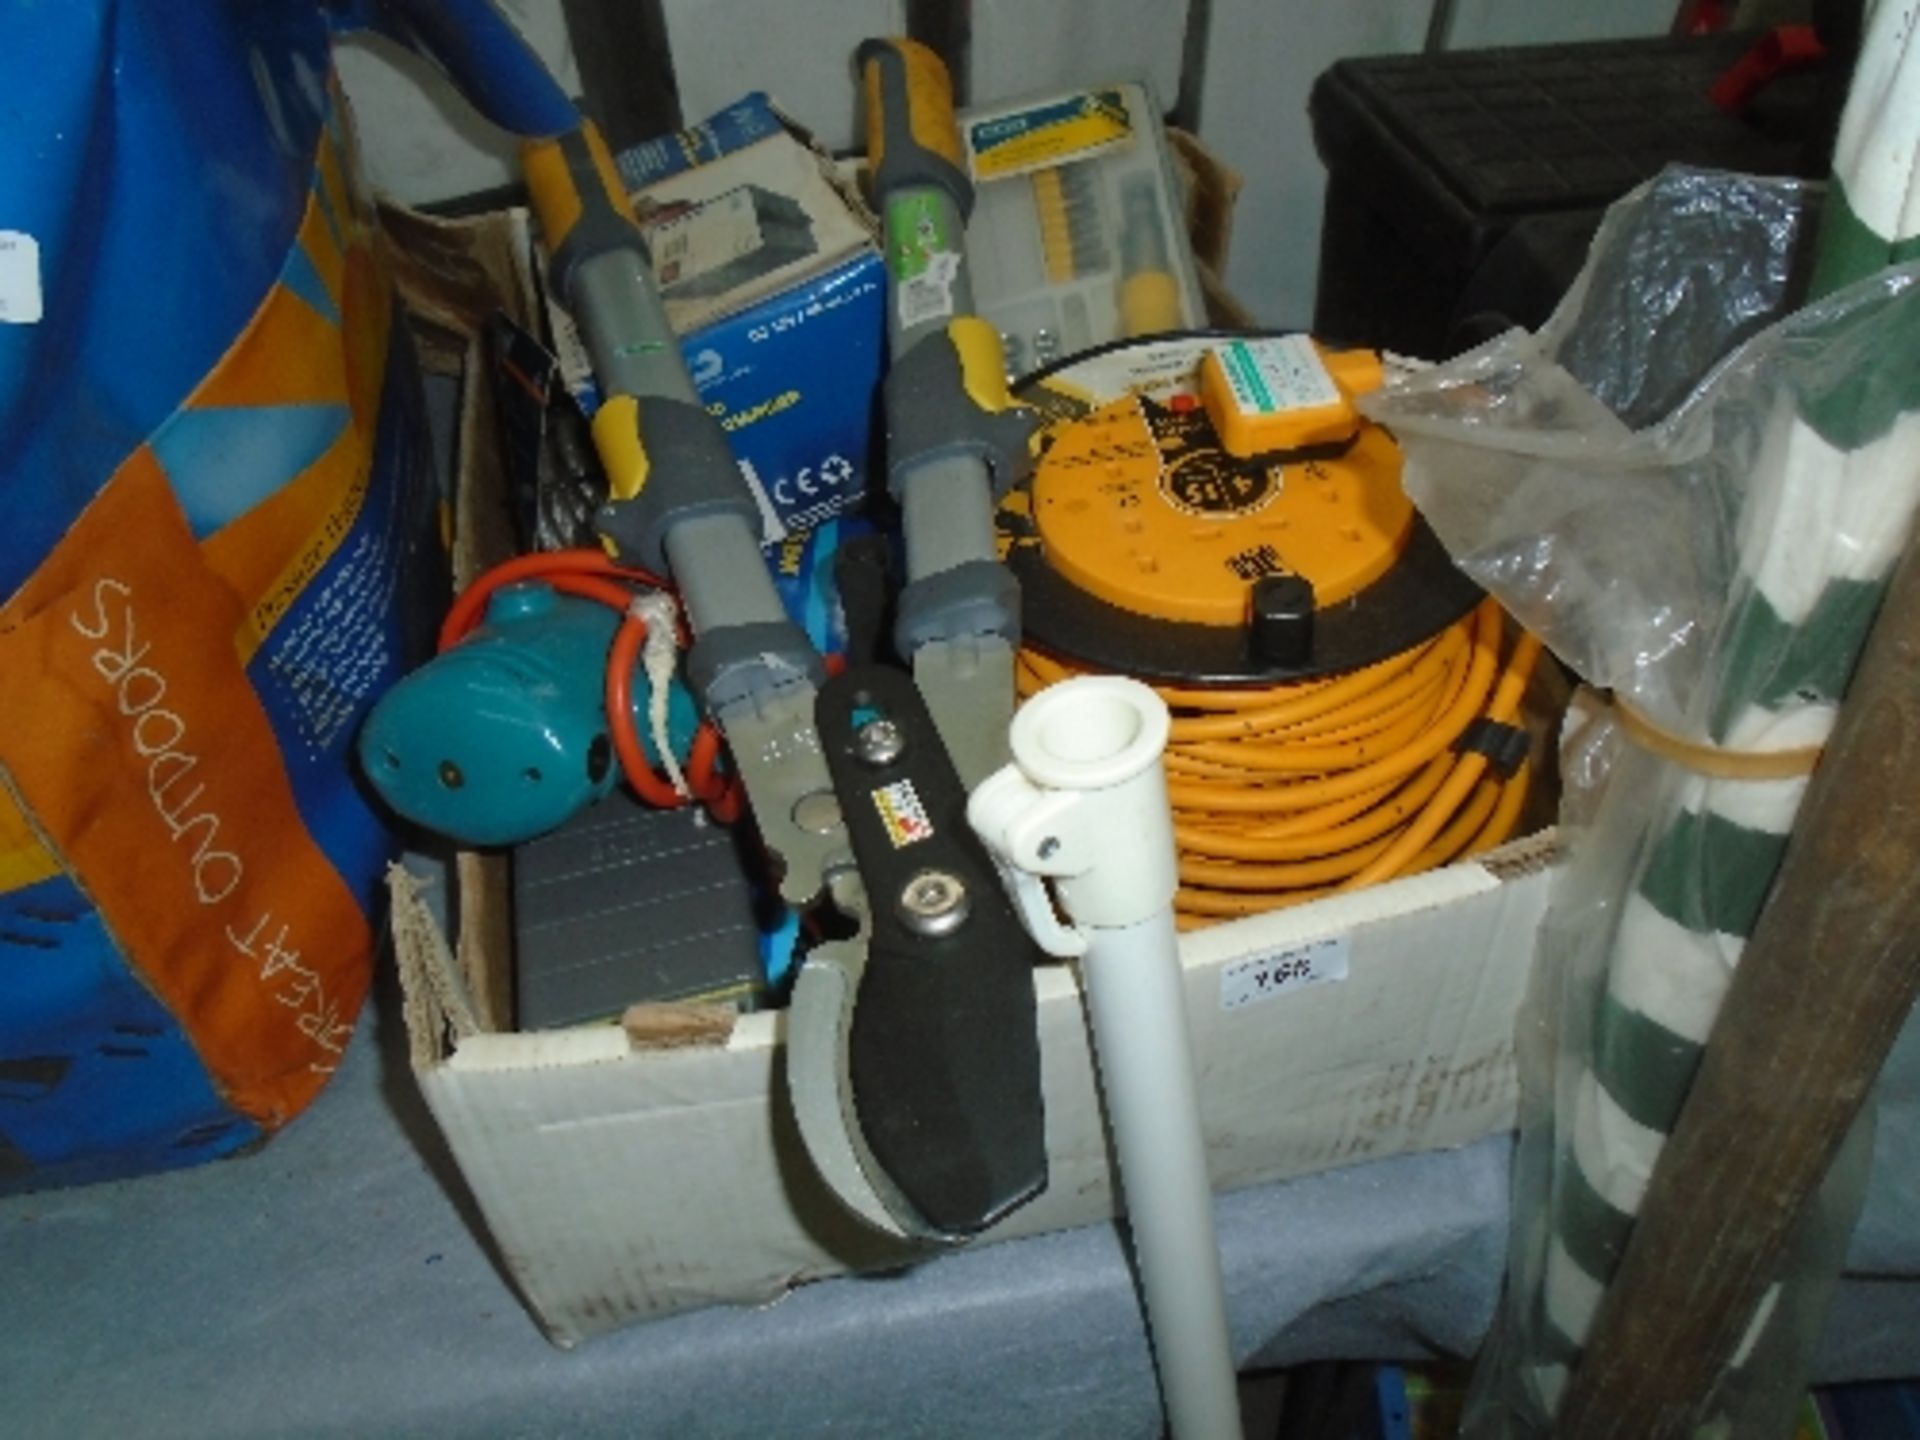 Contents to box - 240v extension reel, hammer drill, ratchet set, garden spade, parasol etc